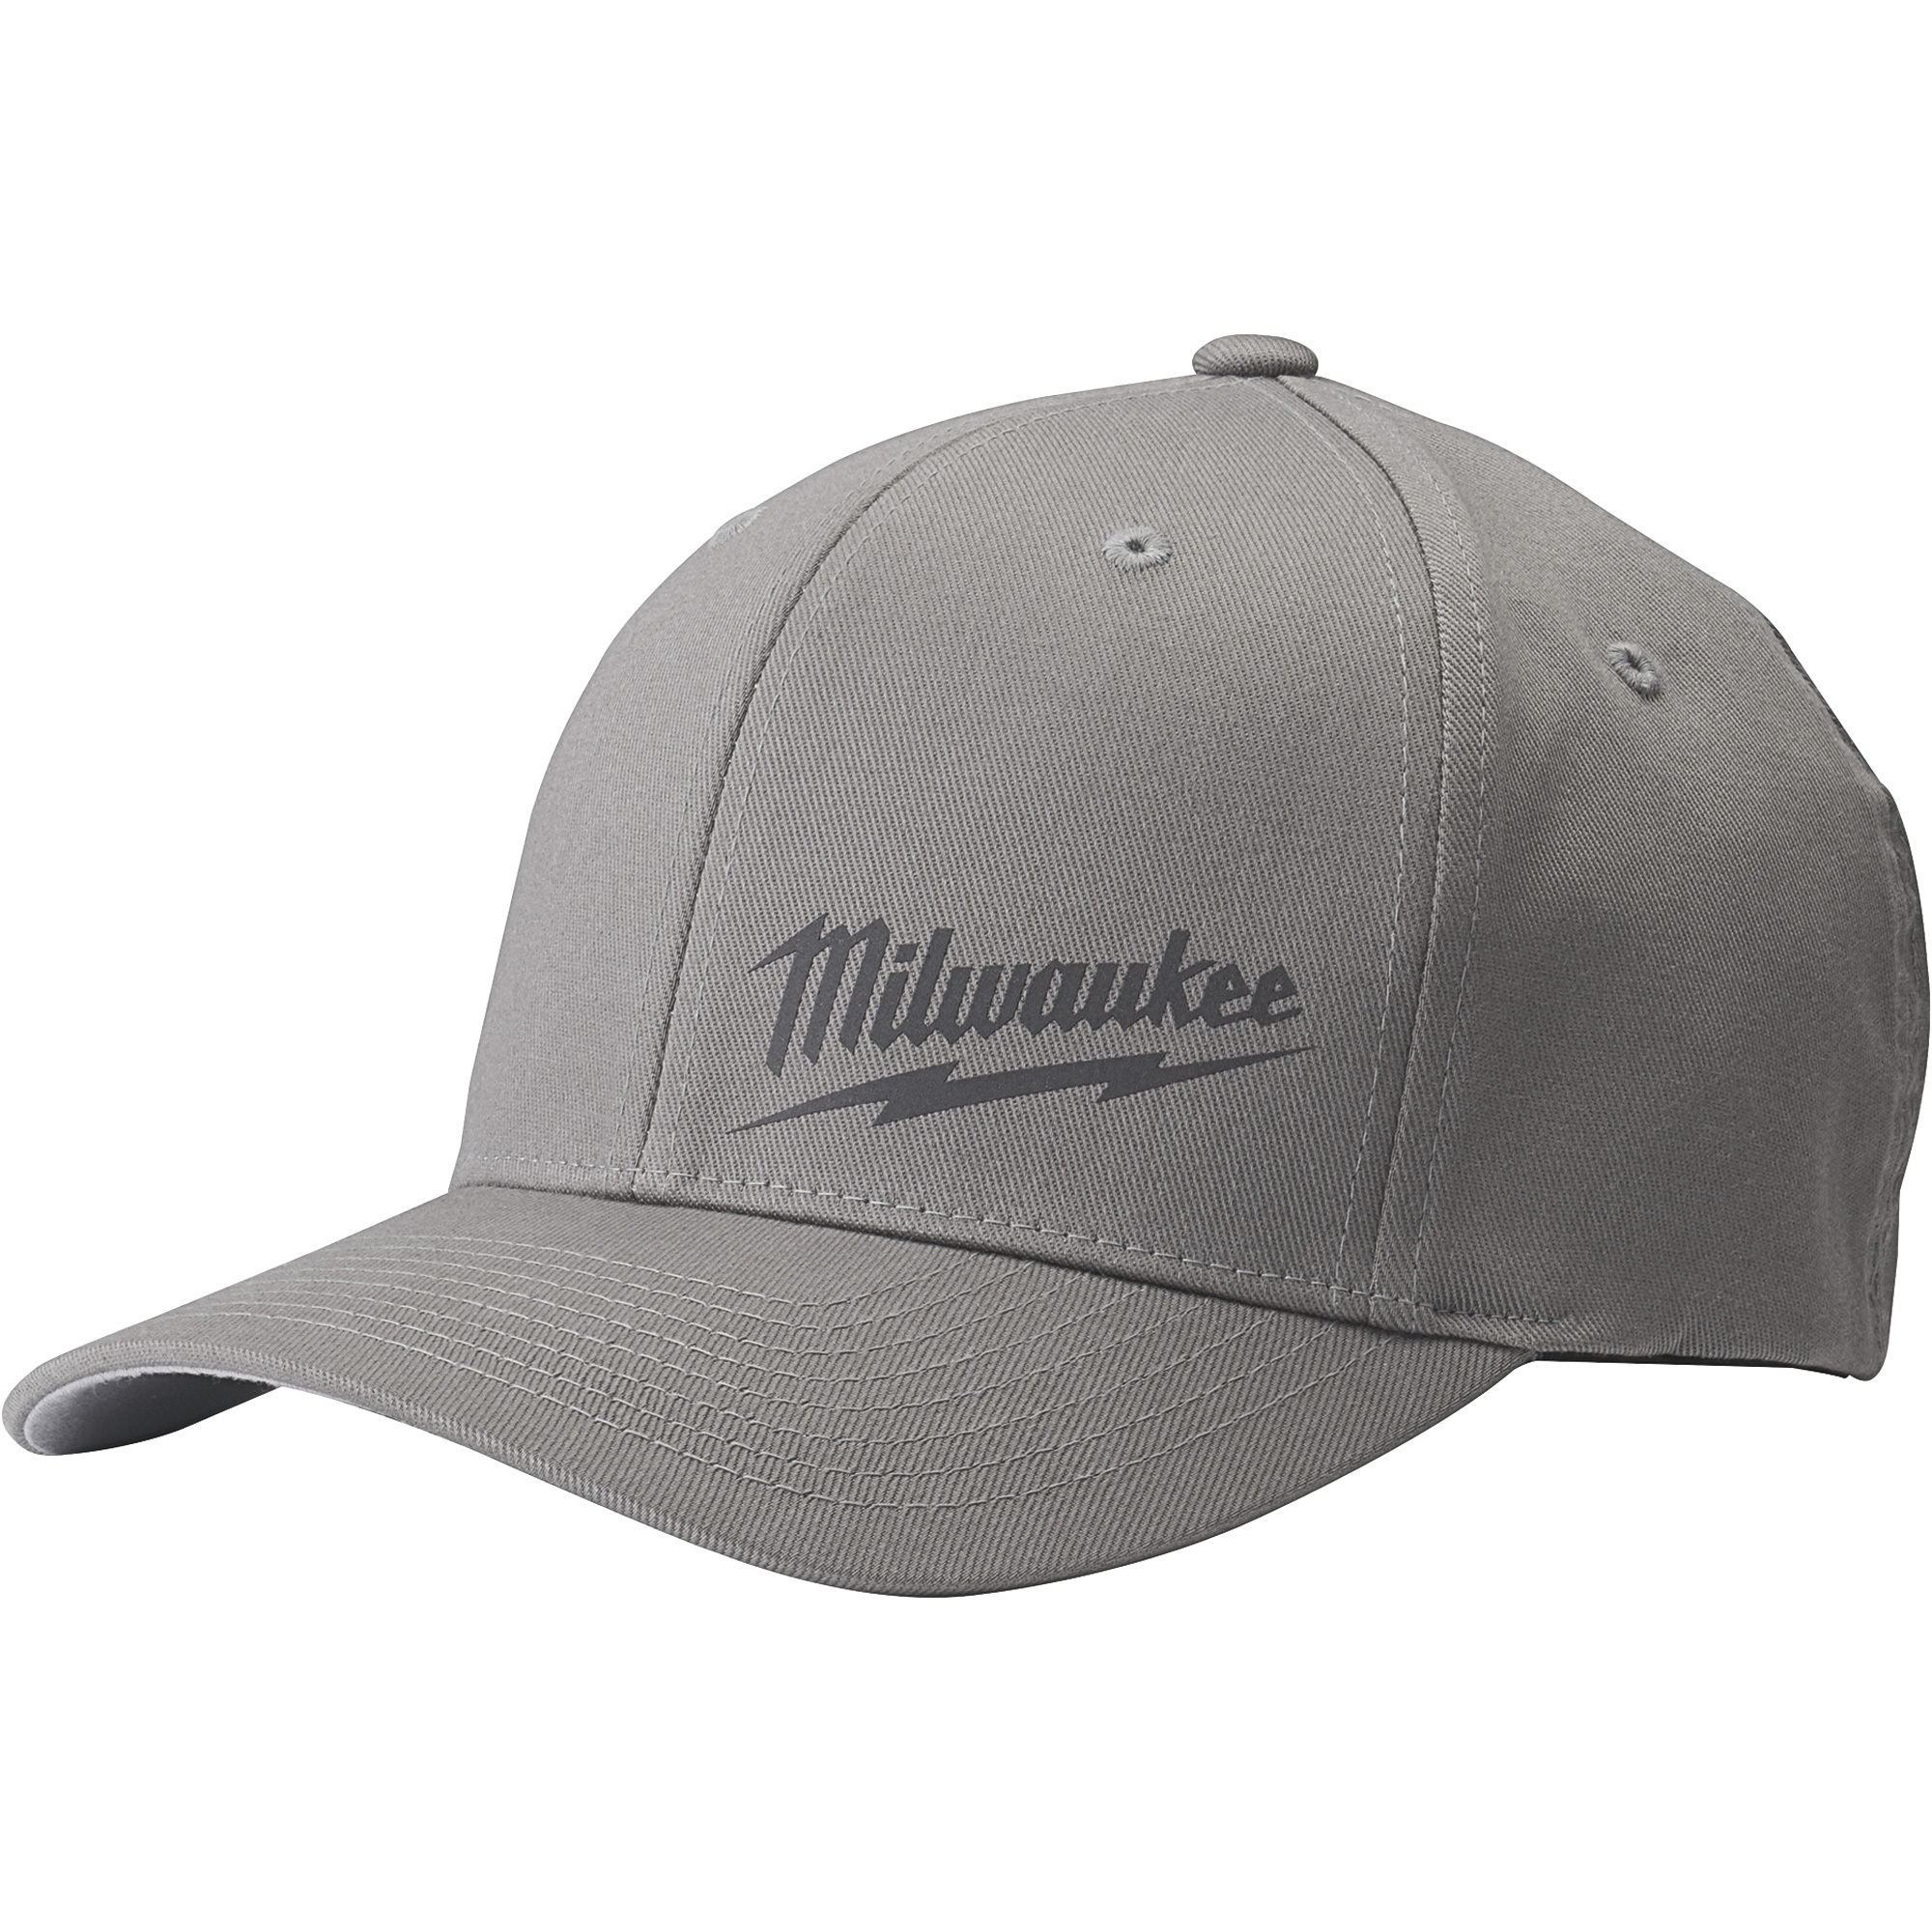 Milwaukee Men's FLEXFIT Fitted Hat, Gray, L/XL, Model 504G-LXL